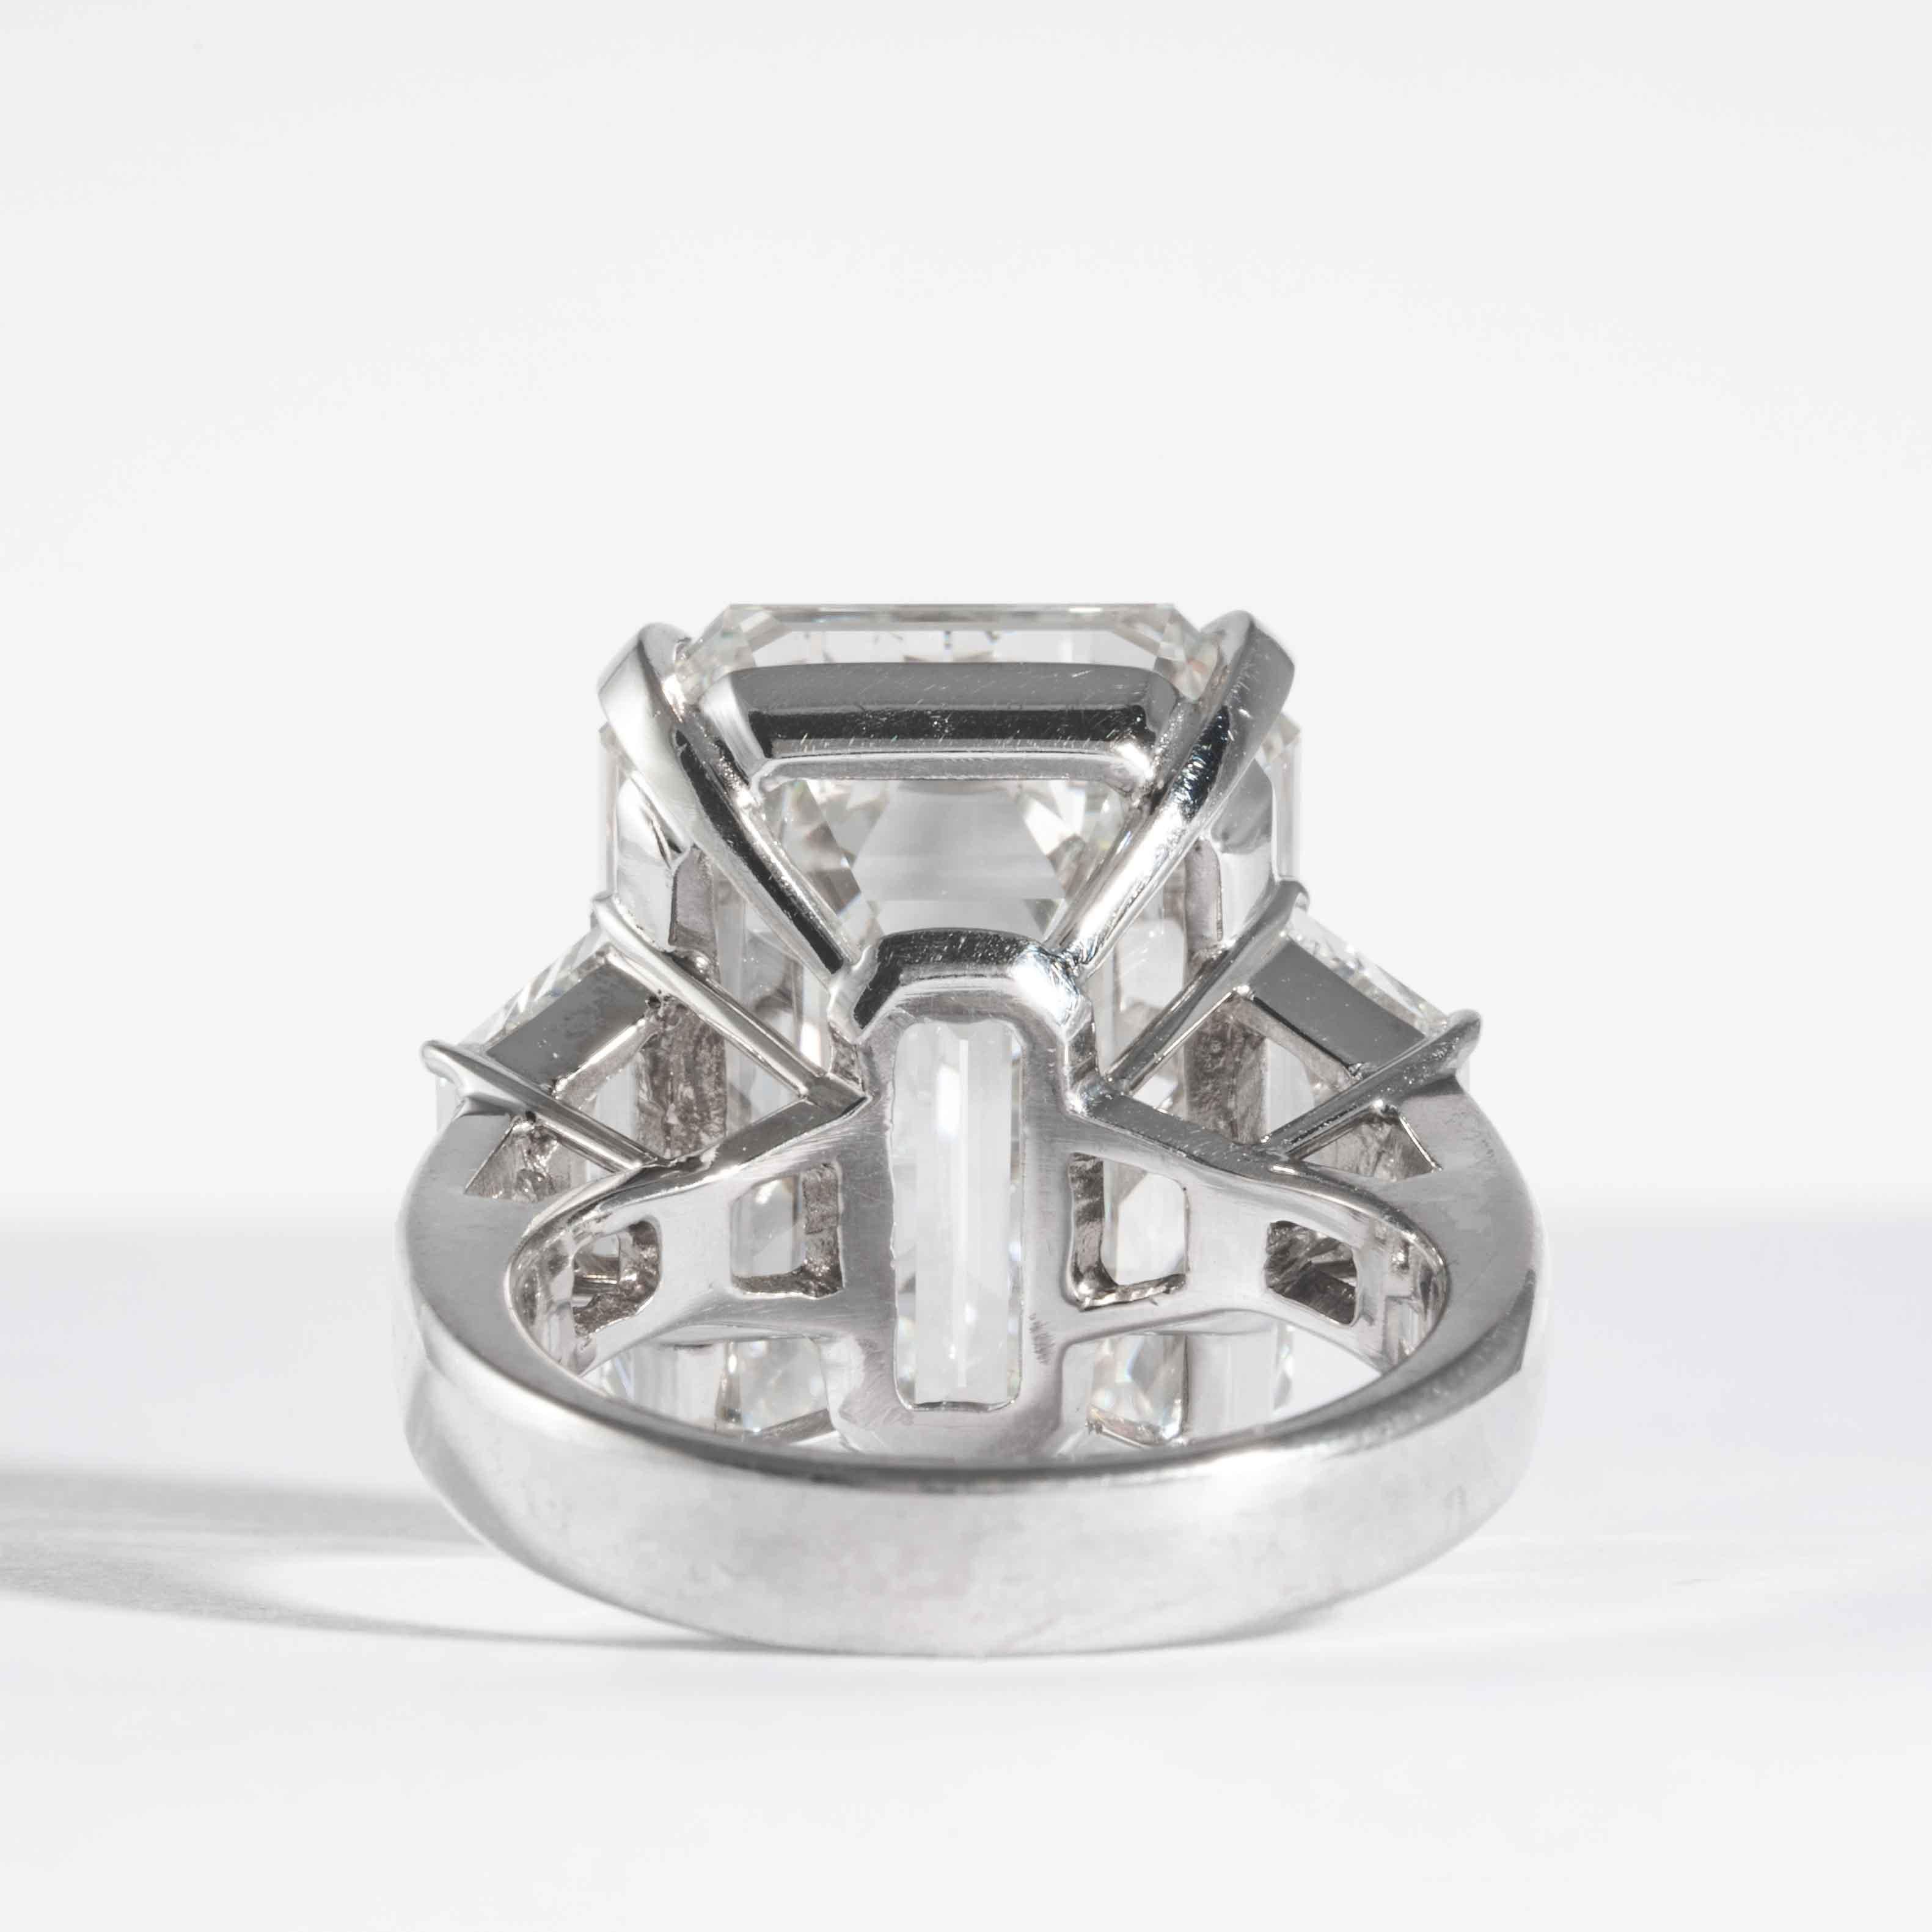 Shreve, Crump & Low GIA Certified 22.02 Carat J VS2 Emerald Cut Diamond Ring 5